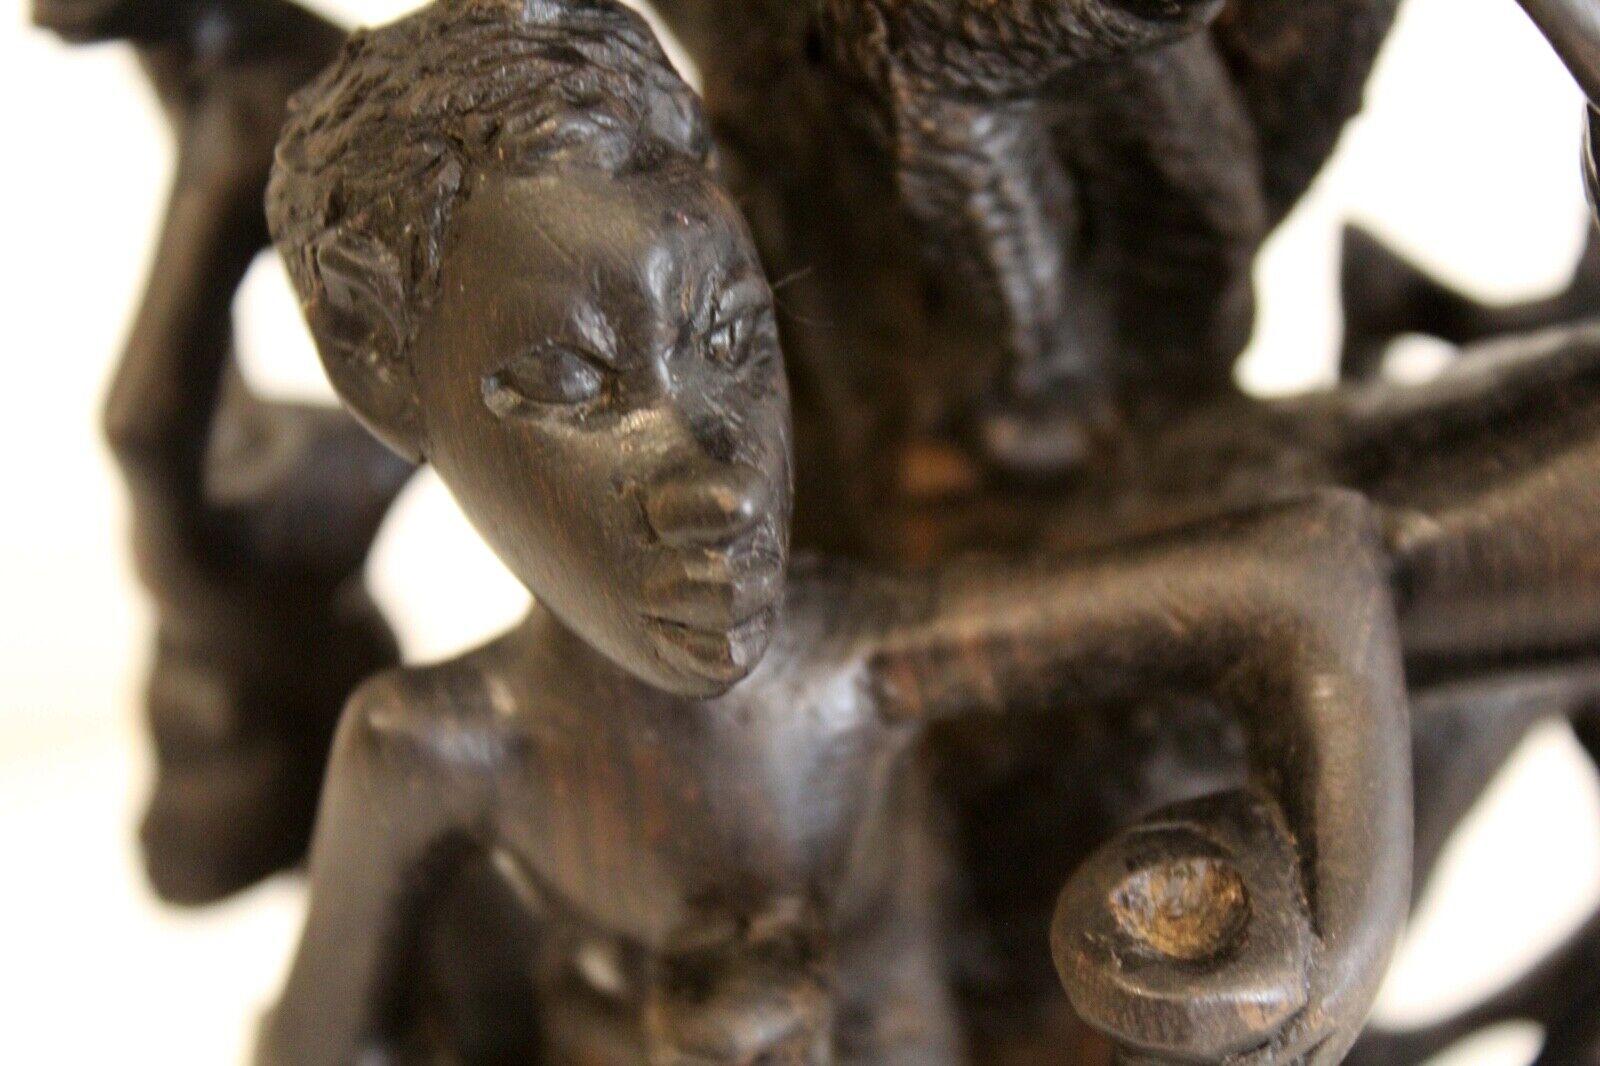 makonde sculpture value